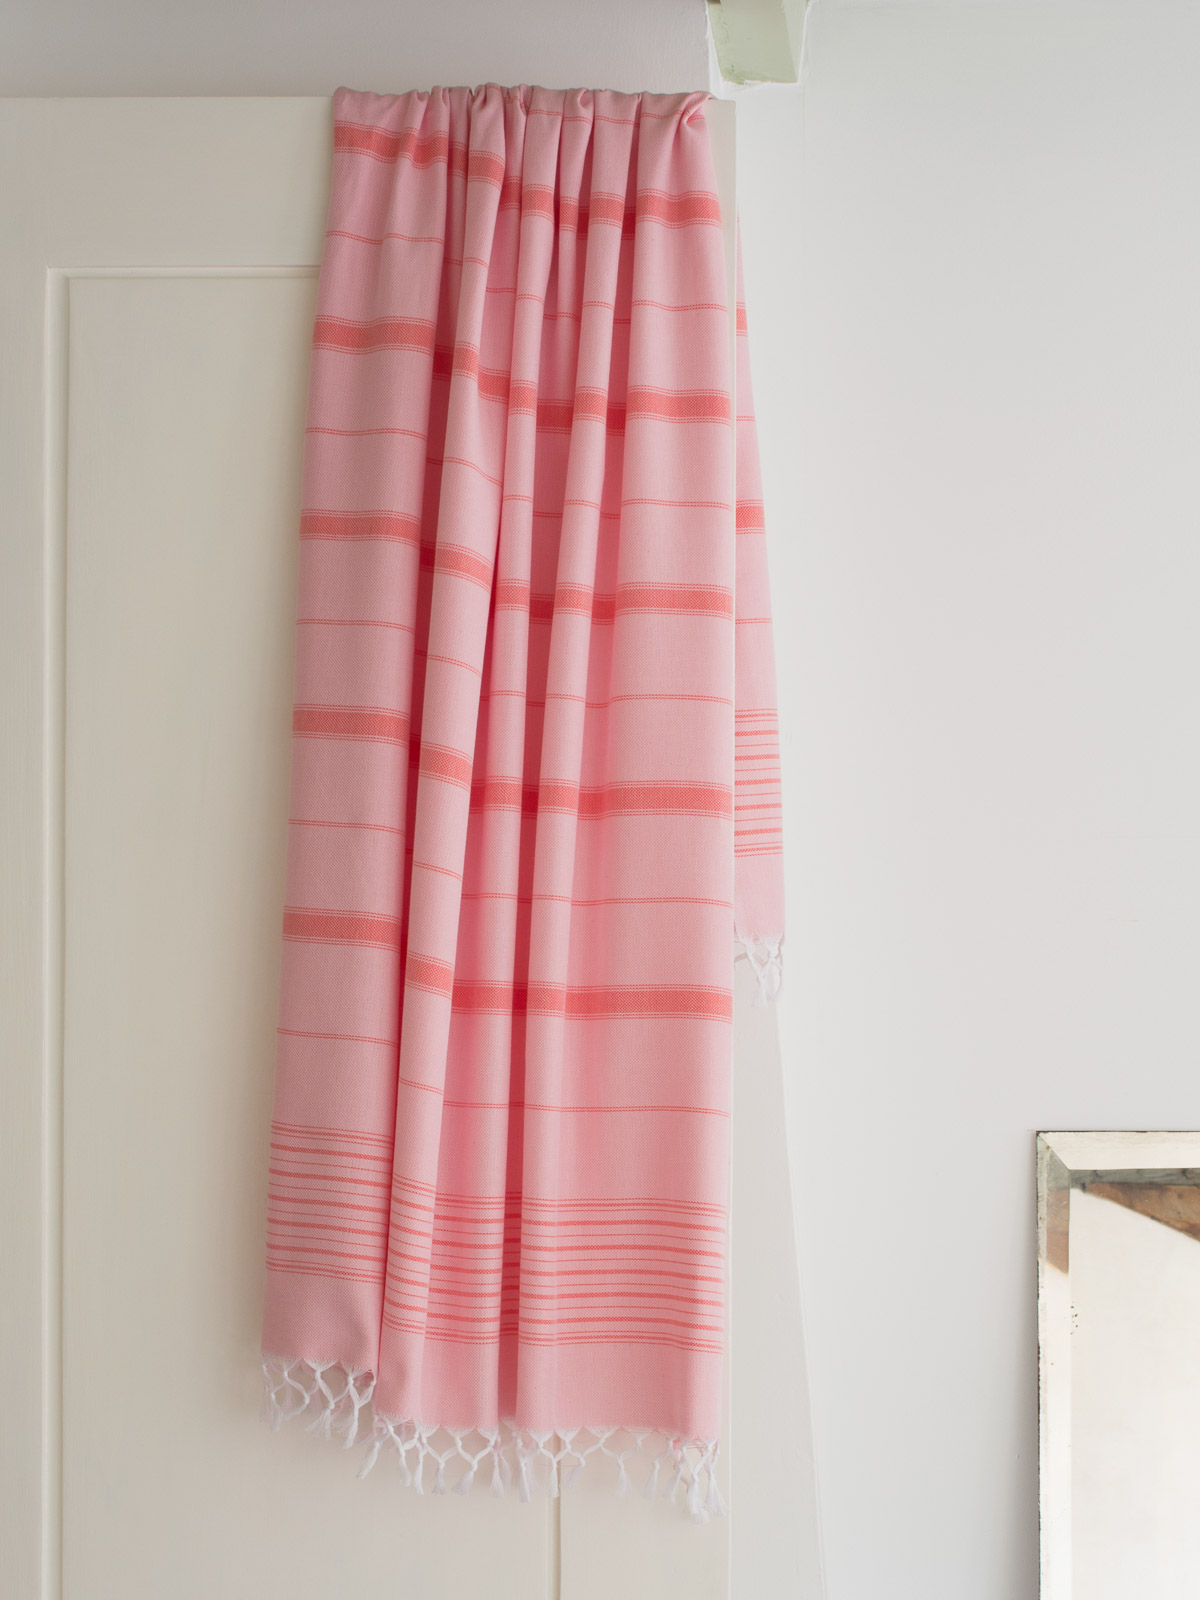 hammam towel powder pink/coral 170x100cm